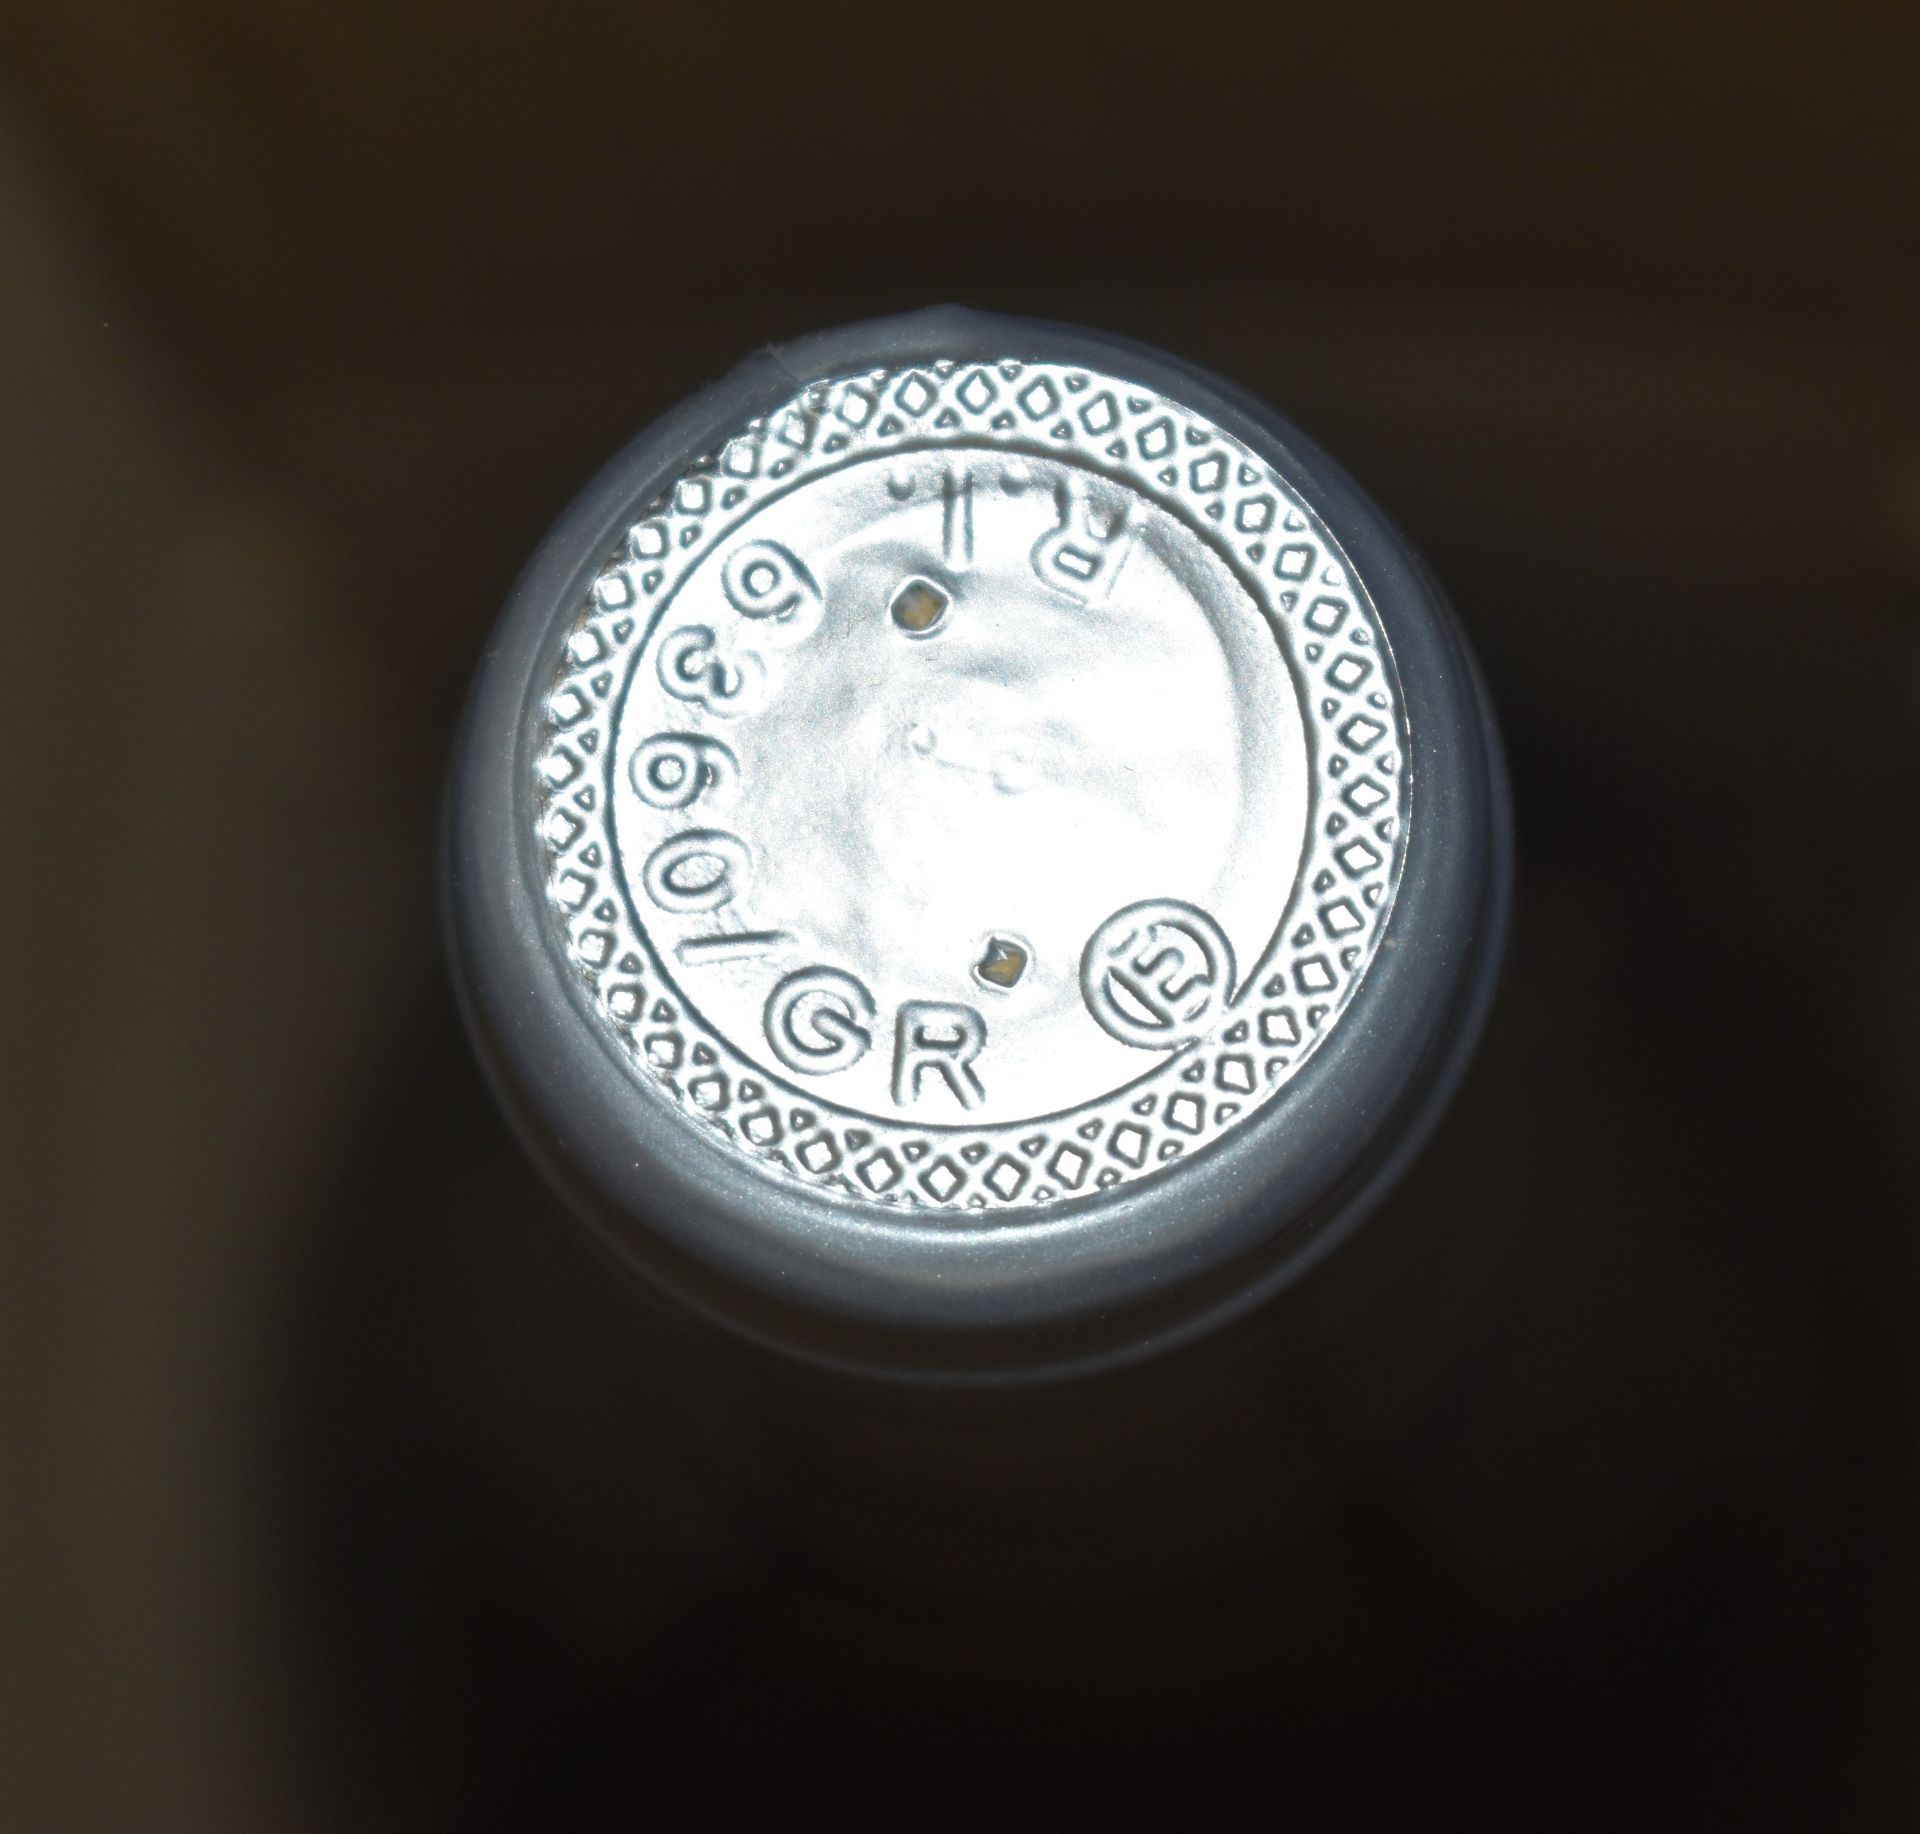 12 x Bottles of Stefano Di Blasi 2019 Vermentino Toscana 13.5% Wine - 750ml Bottles - Drink Until - Image 2 of 8